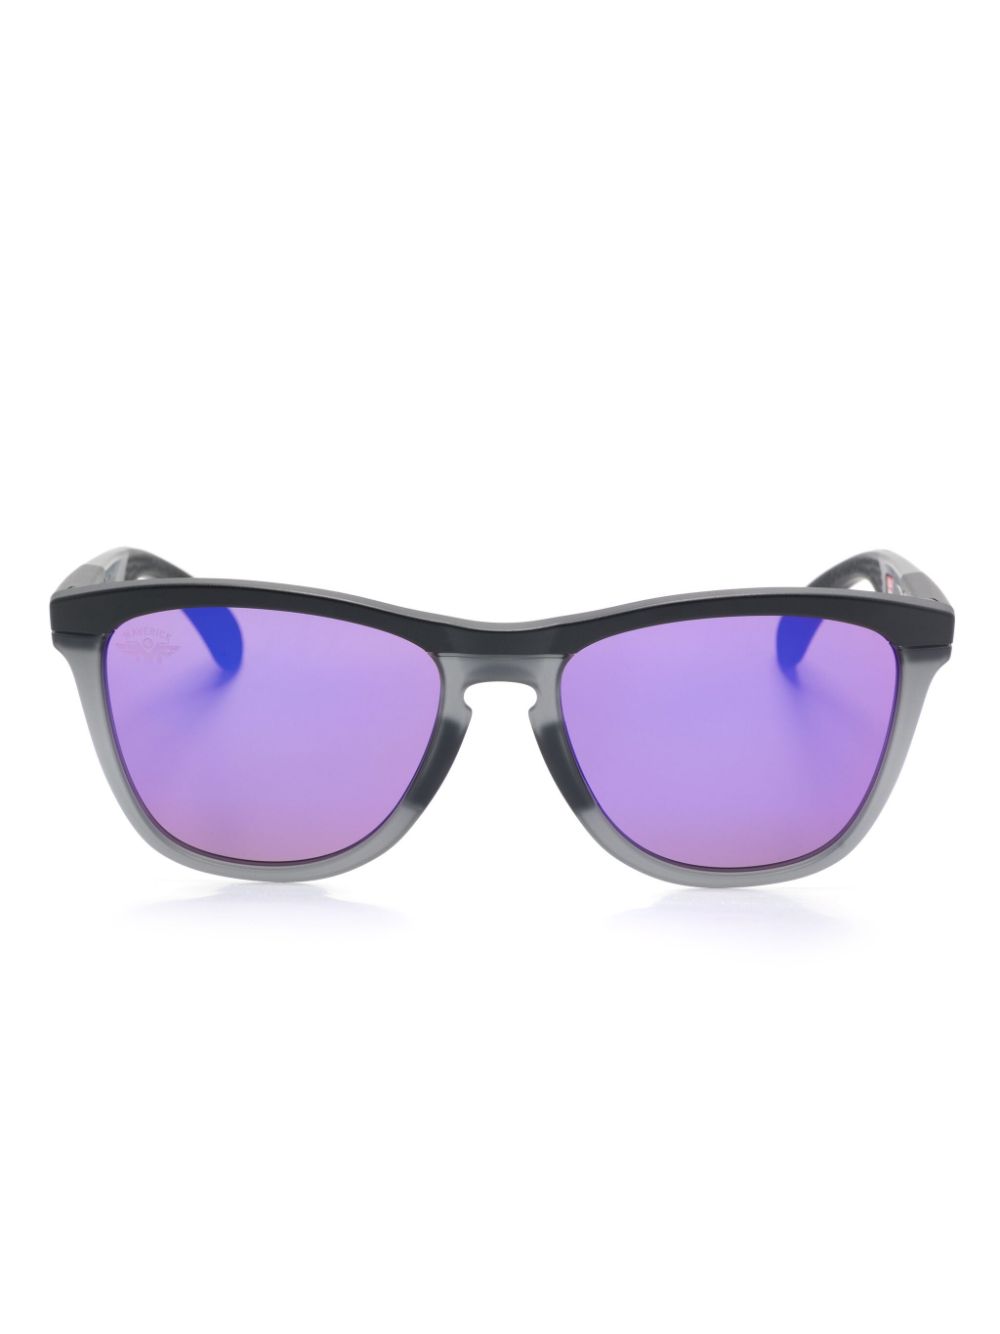 Frogskins square-frame sunglasses<BR/><BR/><BR/>